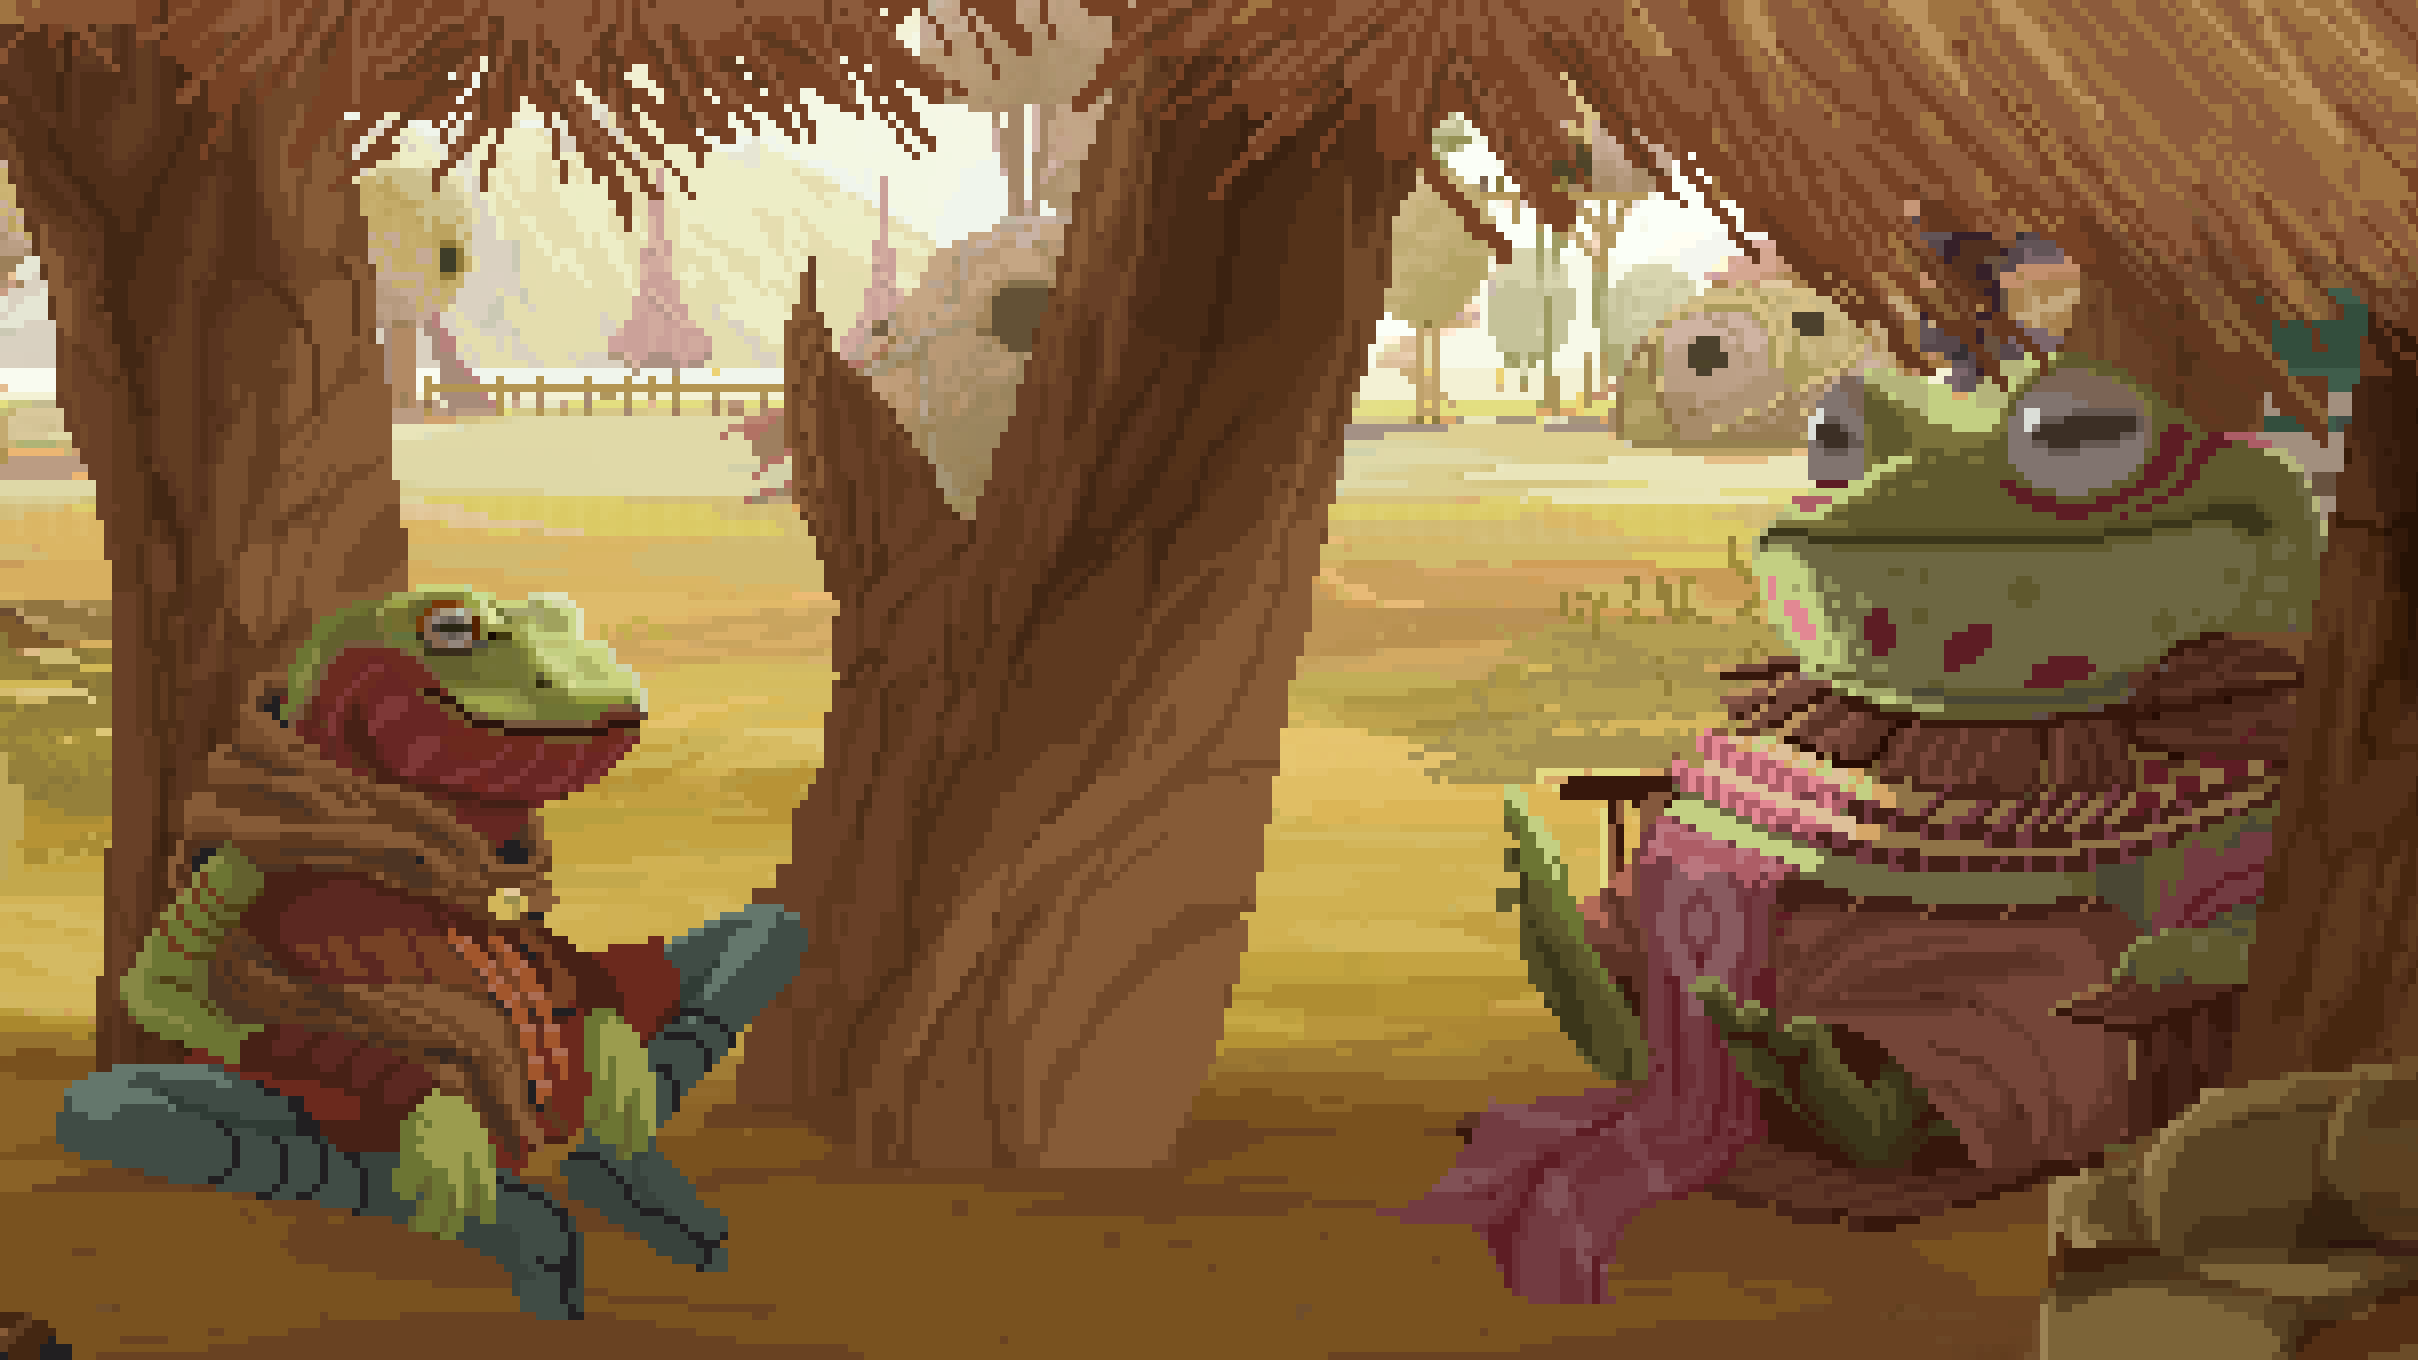 Humanoid frogs relaxing in a hut in a Sandwalkers screenshot.